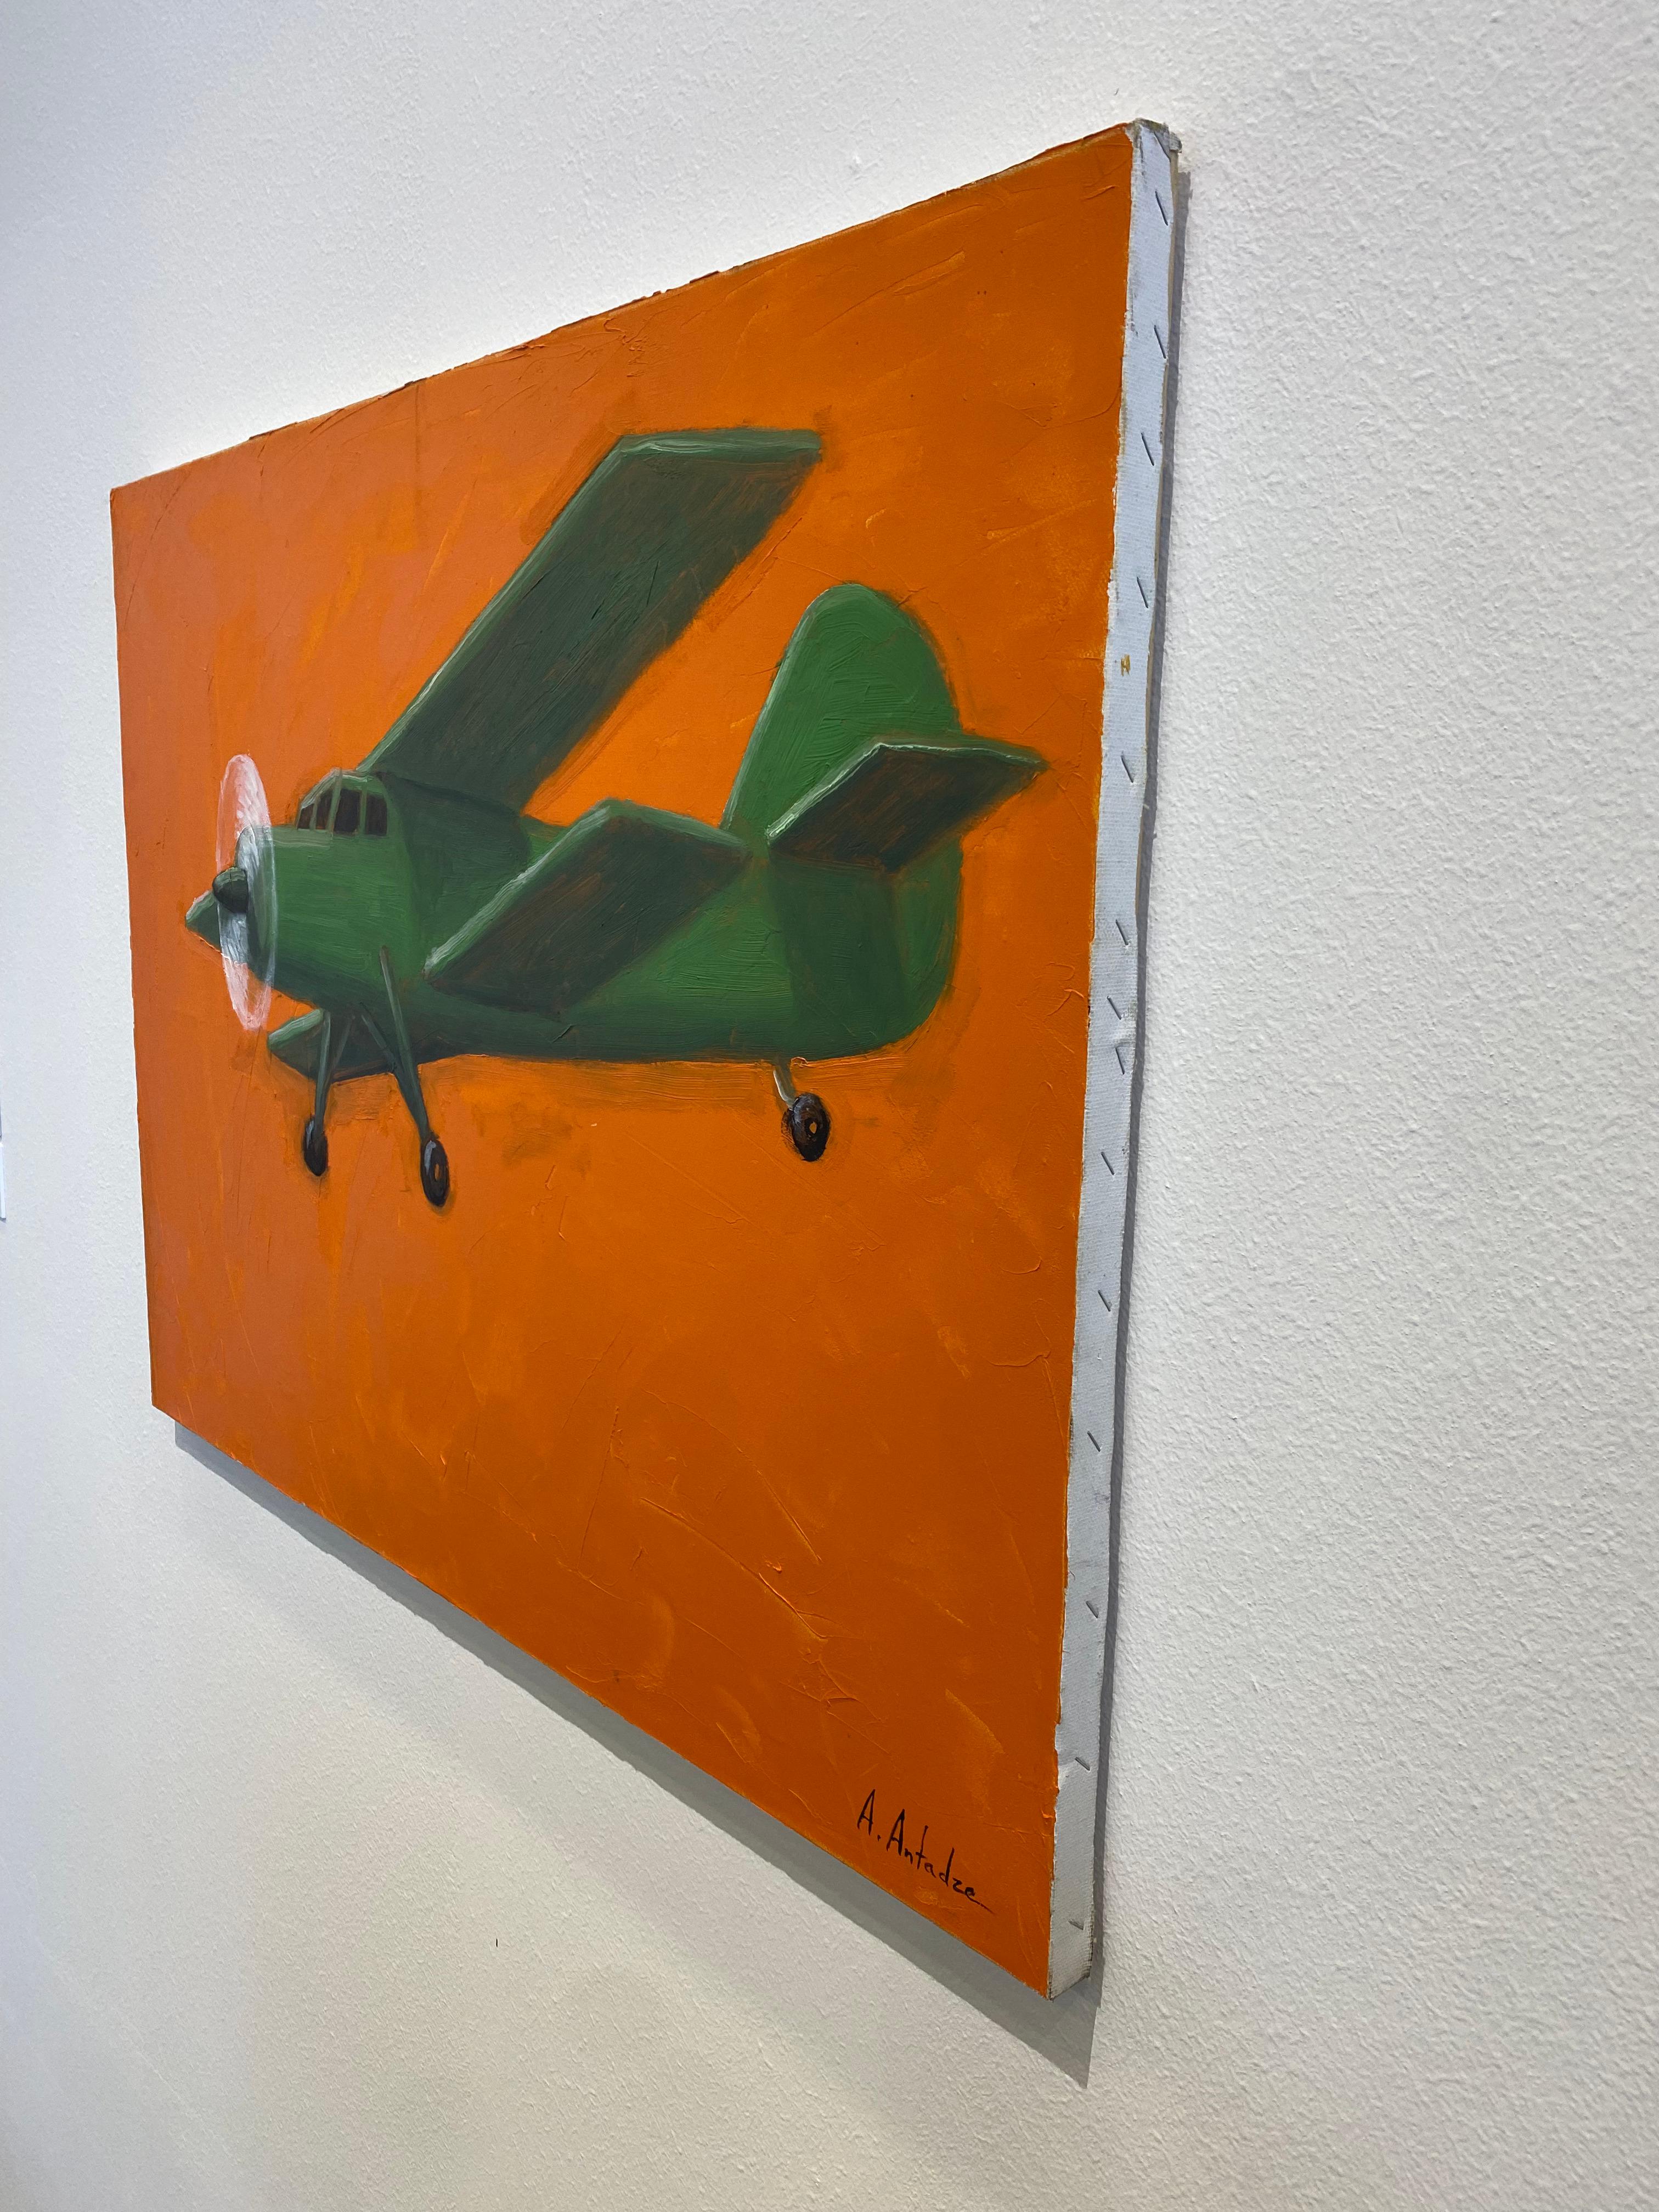 Georgian Contemporary Art by Alexander Sandro Antadze - Green Plane For Sale 10